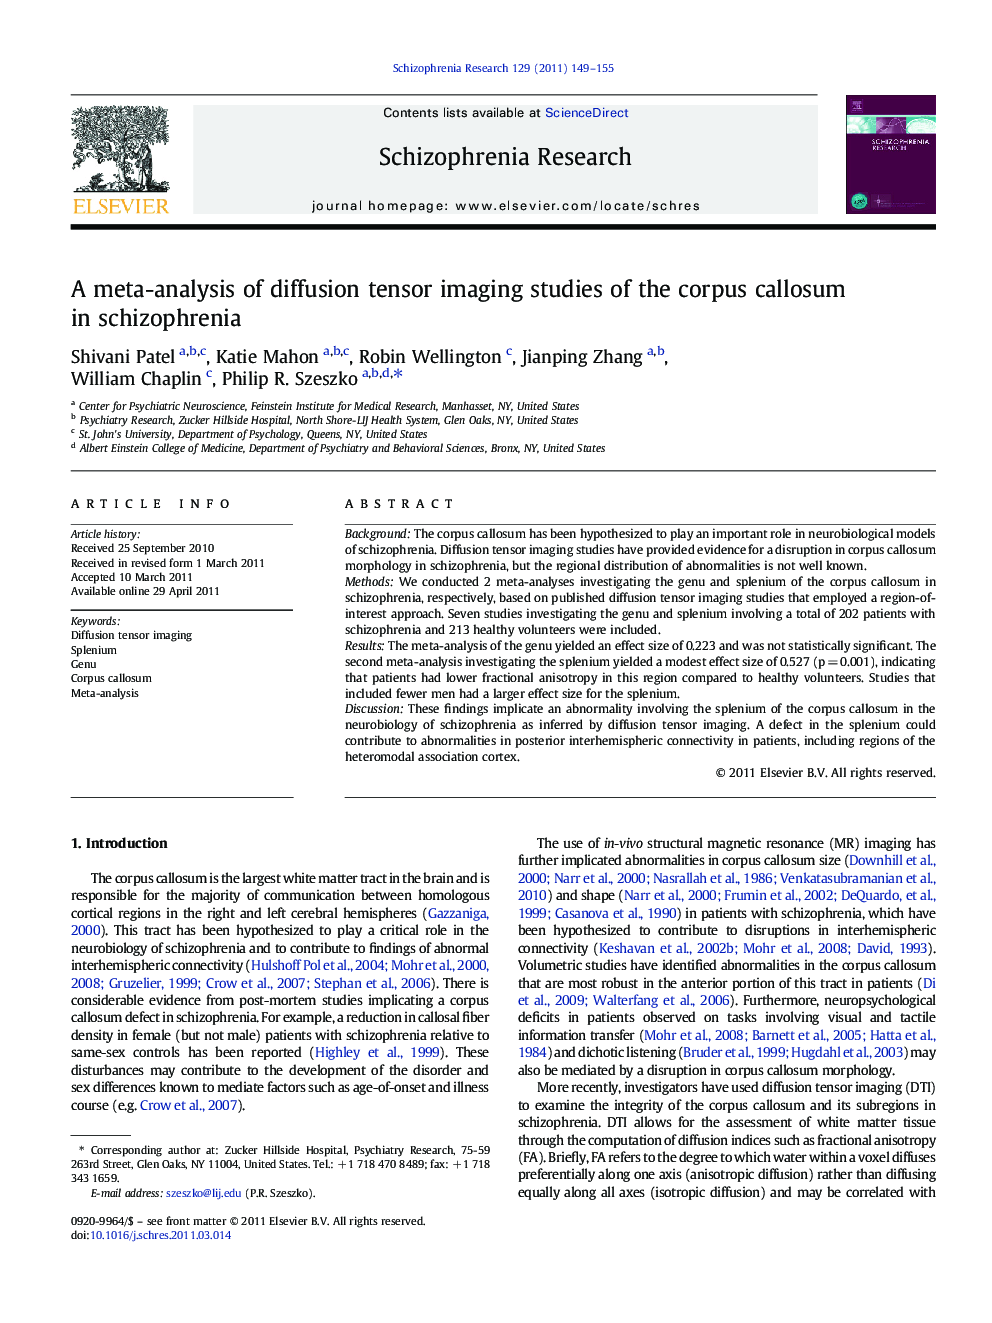 A meta-analysis of diffusion tensor imaging studies of the corpus callosum in schizophrenia